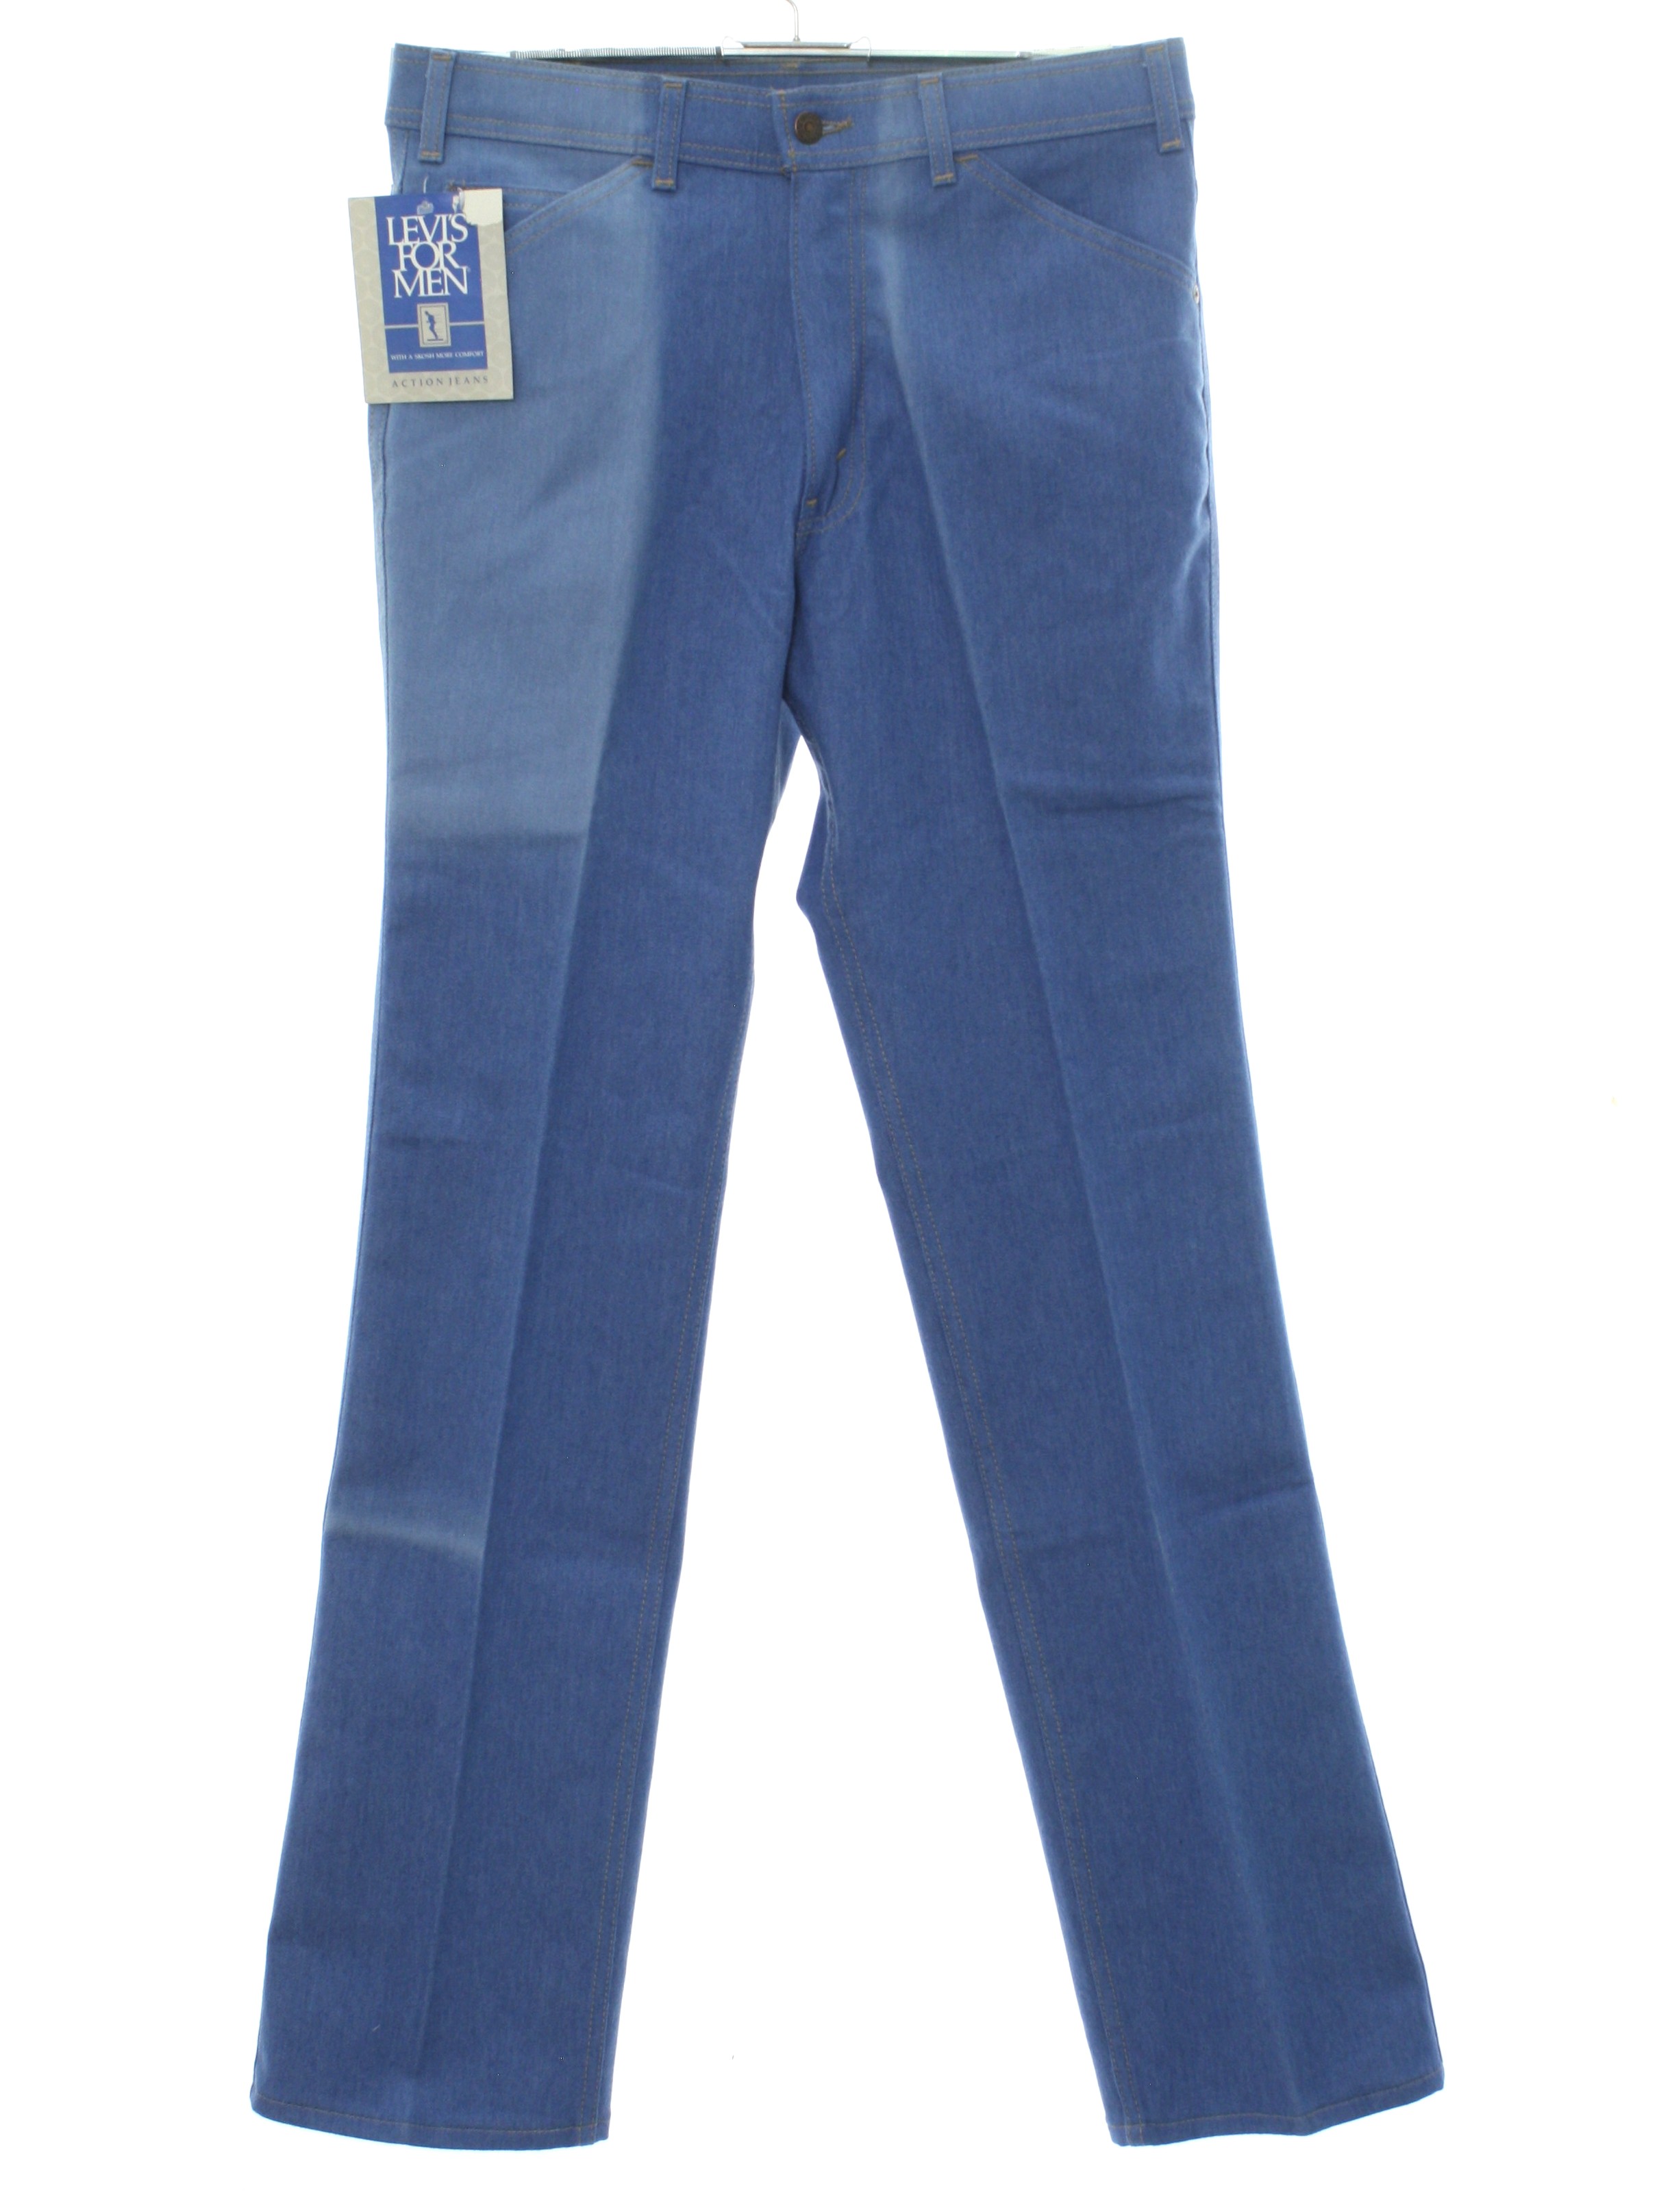 1970s jeans mens